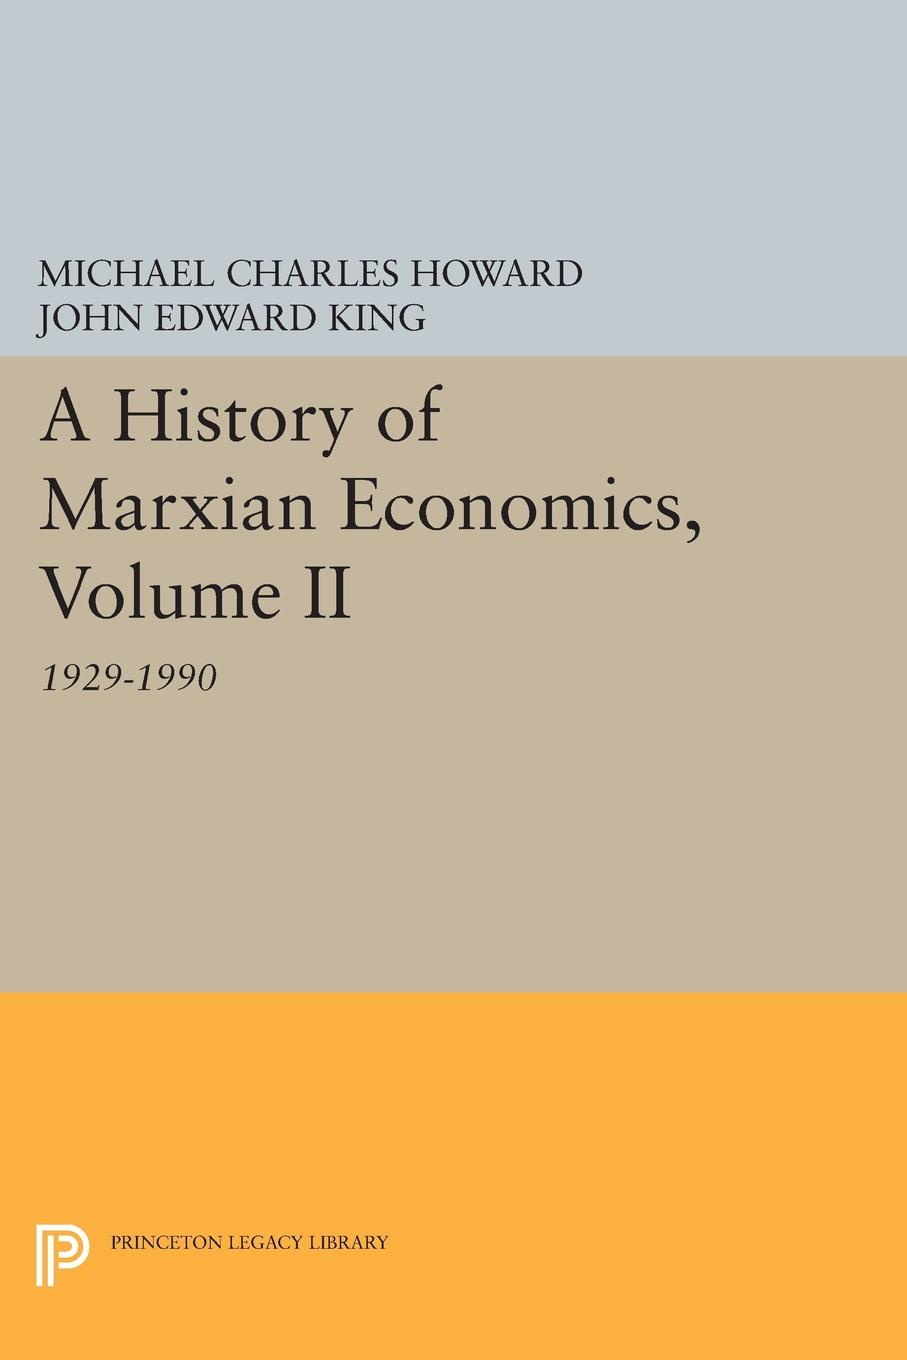 A History of Marxian Economics, Volume II. 1929-1990